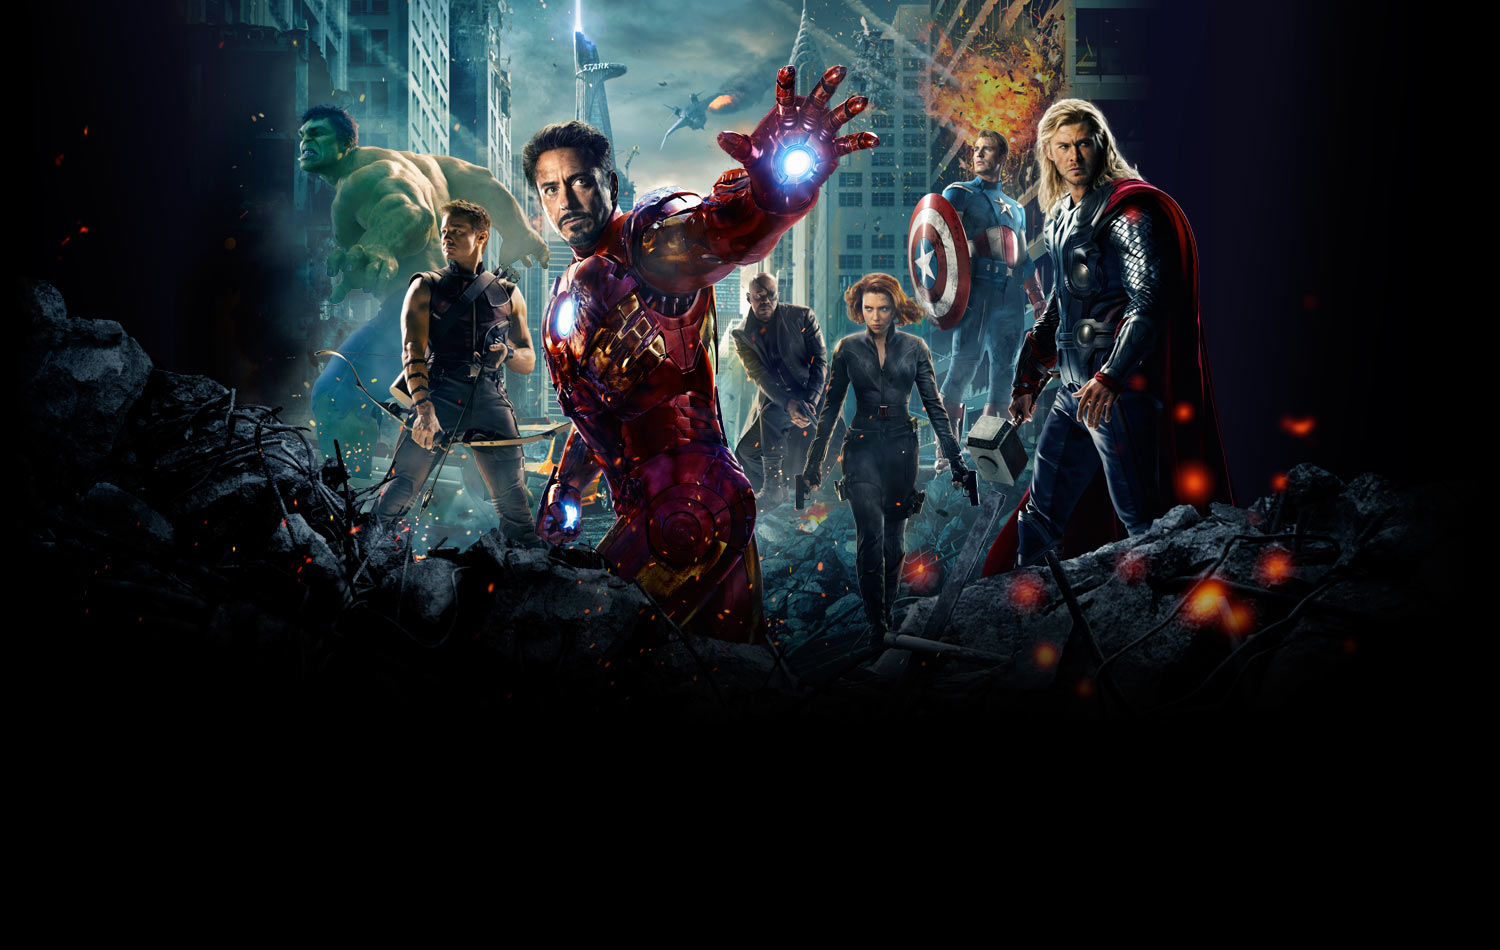 Synapserpg The Avengers Wallpaper